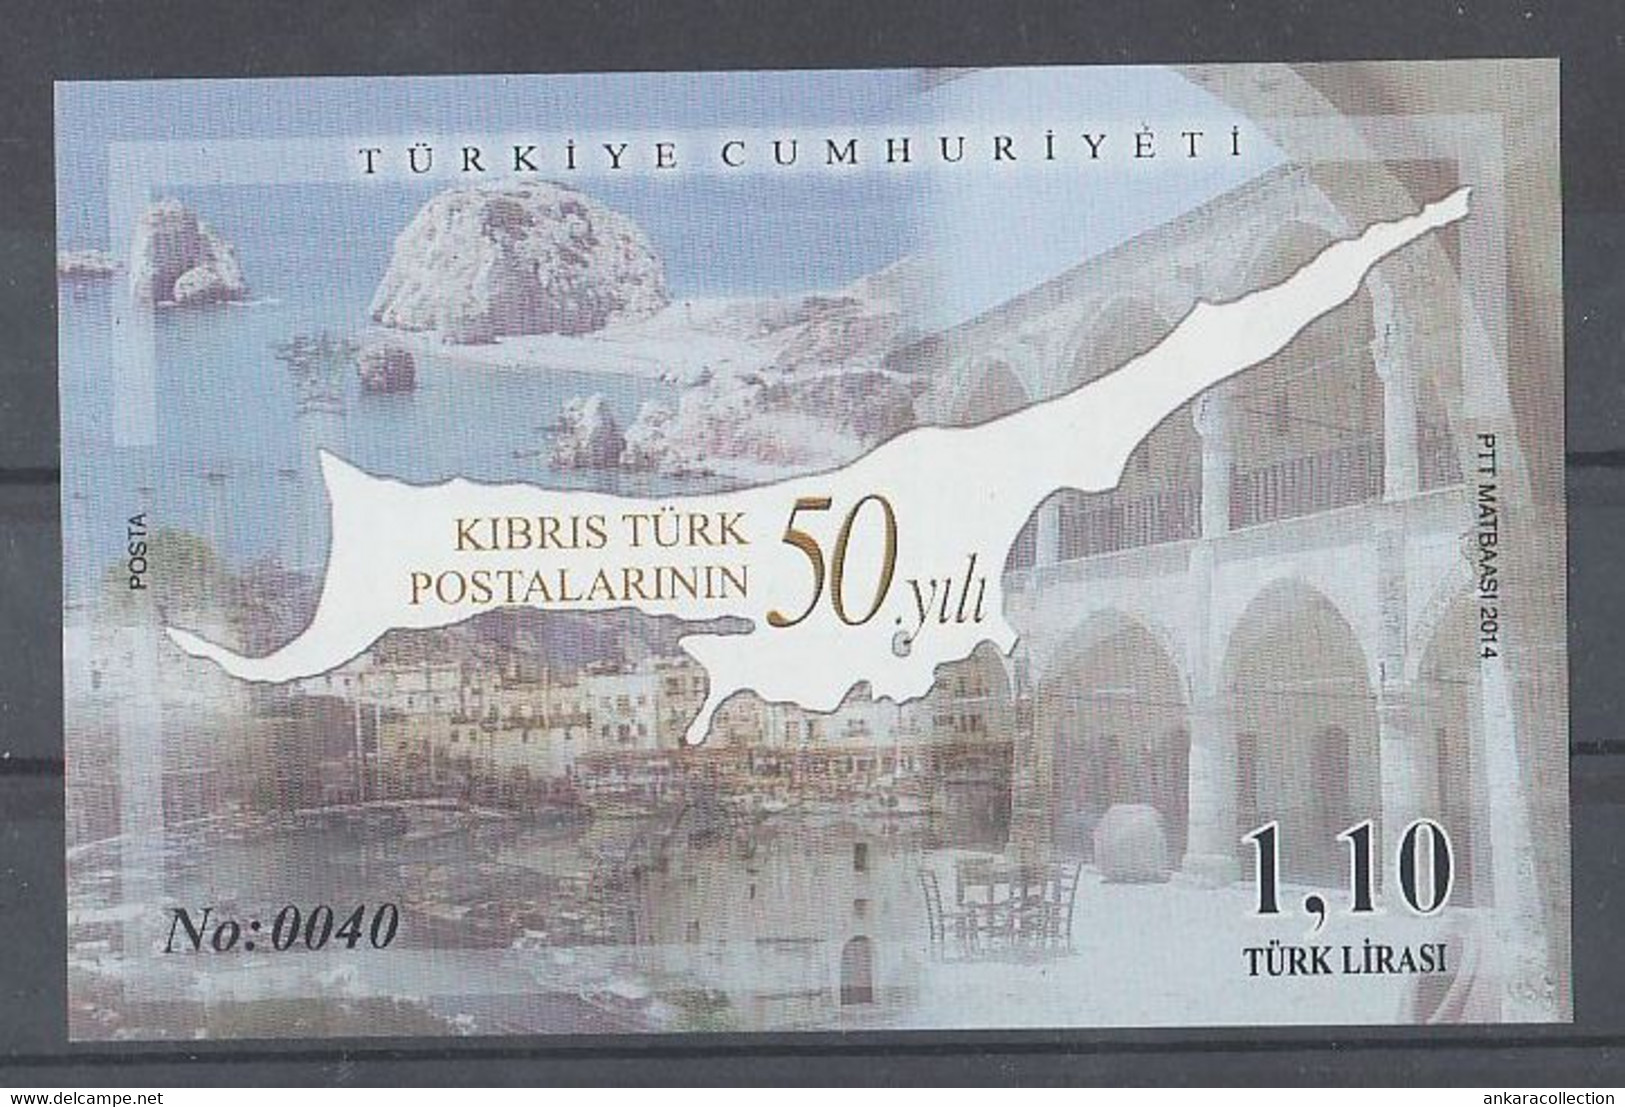 AC - TURKEY STAMP - 50th YEAR OF CYPRUS TURK POSTS MNH NUMBERED BLOCK ANKARA 06 JANUARY 2014 - Markenheftchen